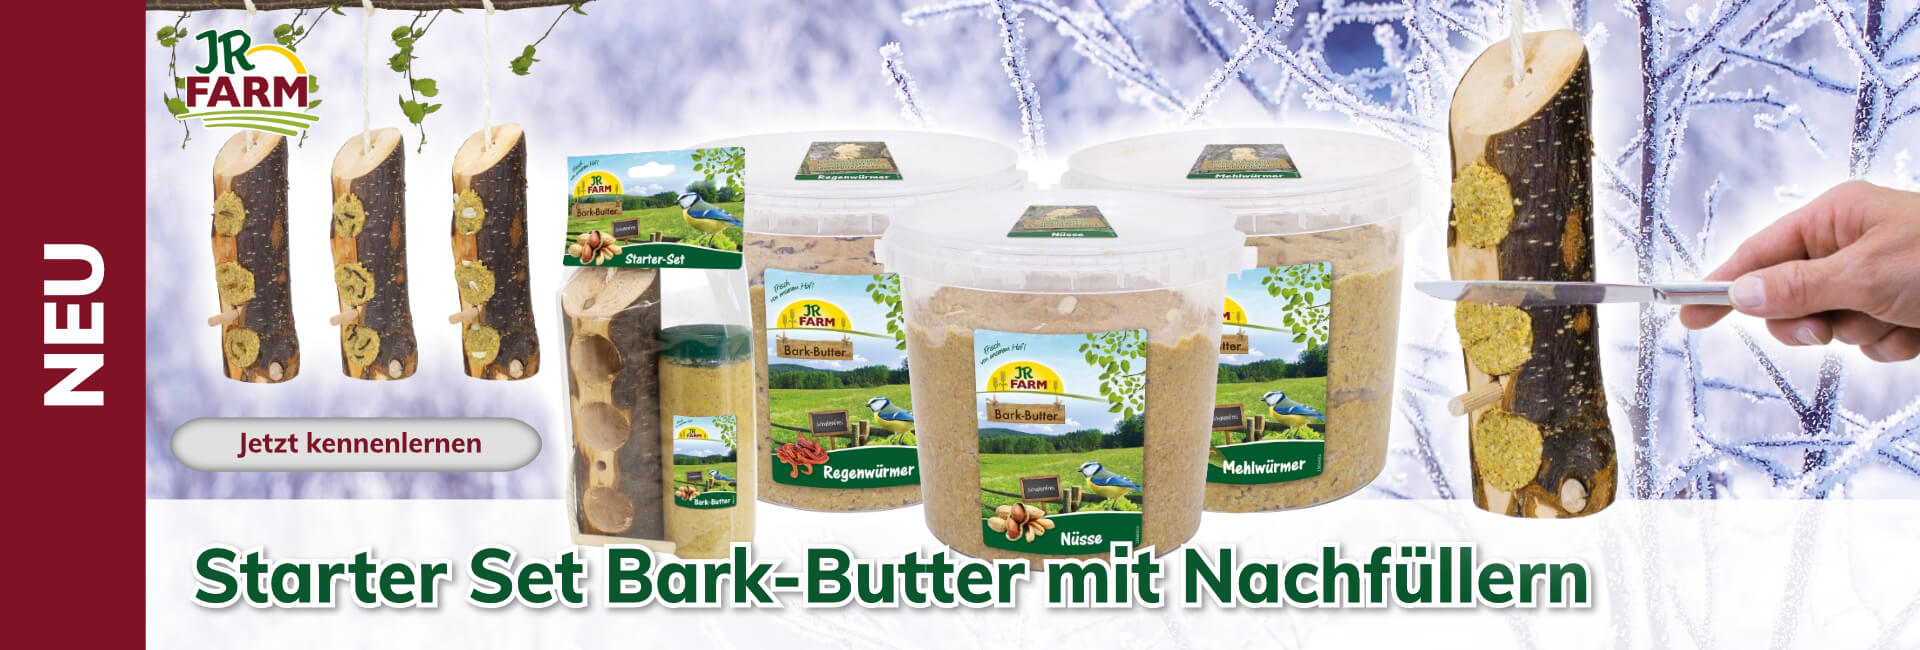 JR Farm Starter Set Bark-Butter mit Nachfüllern